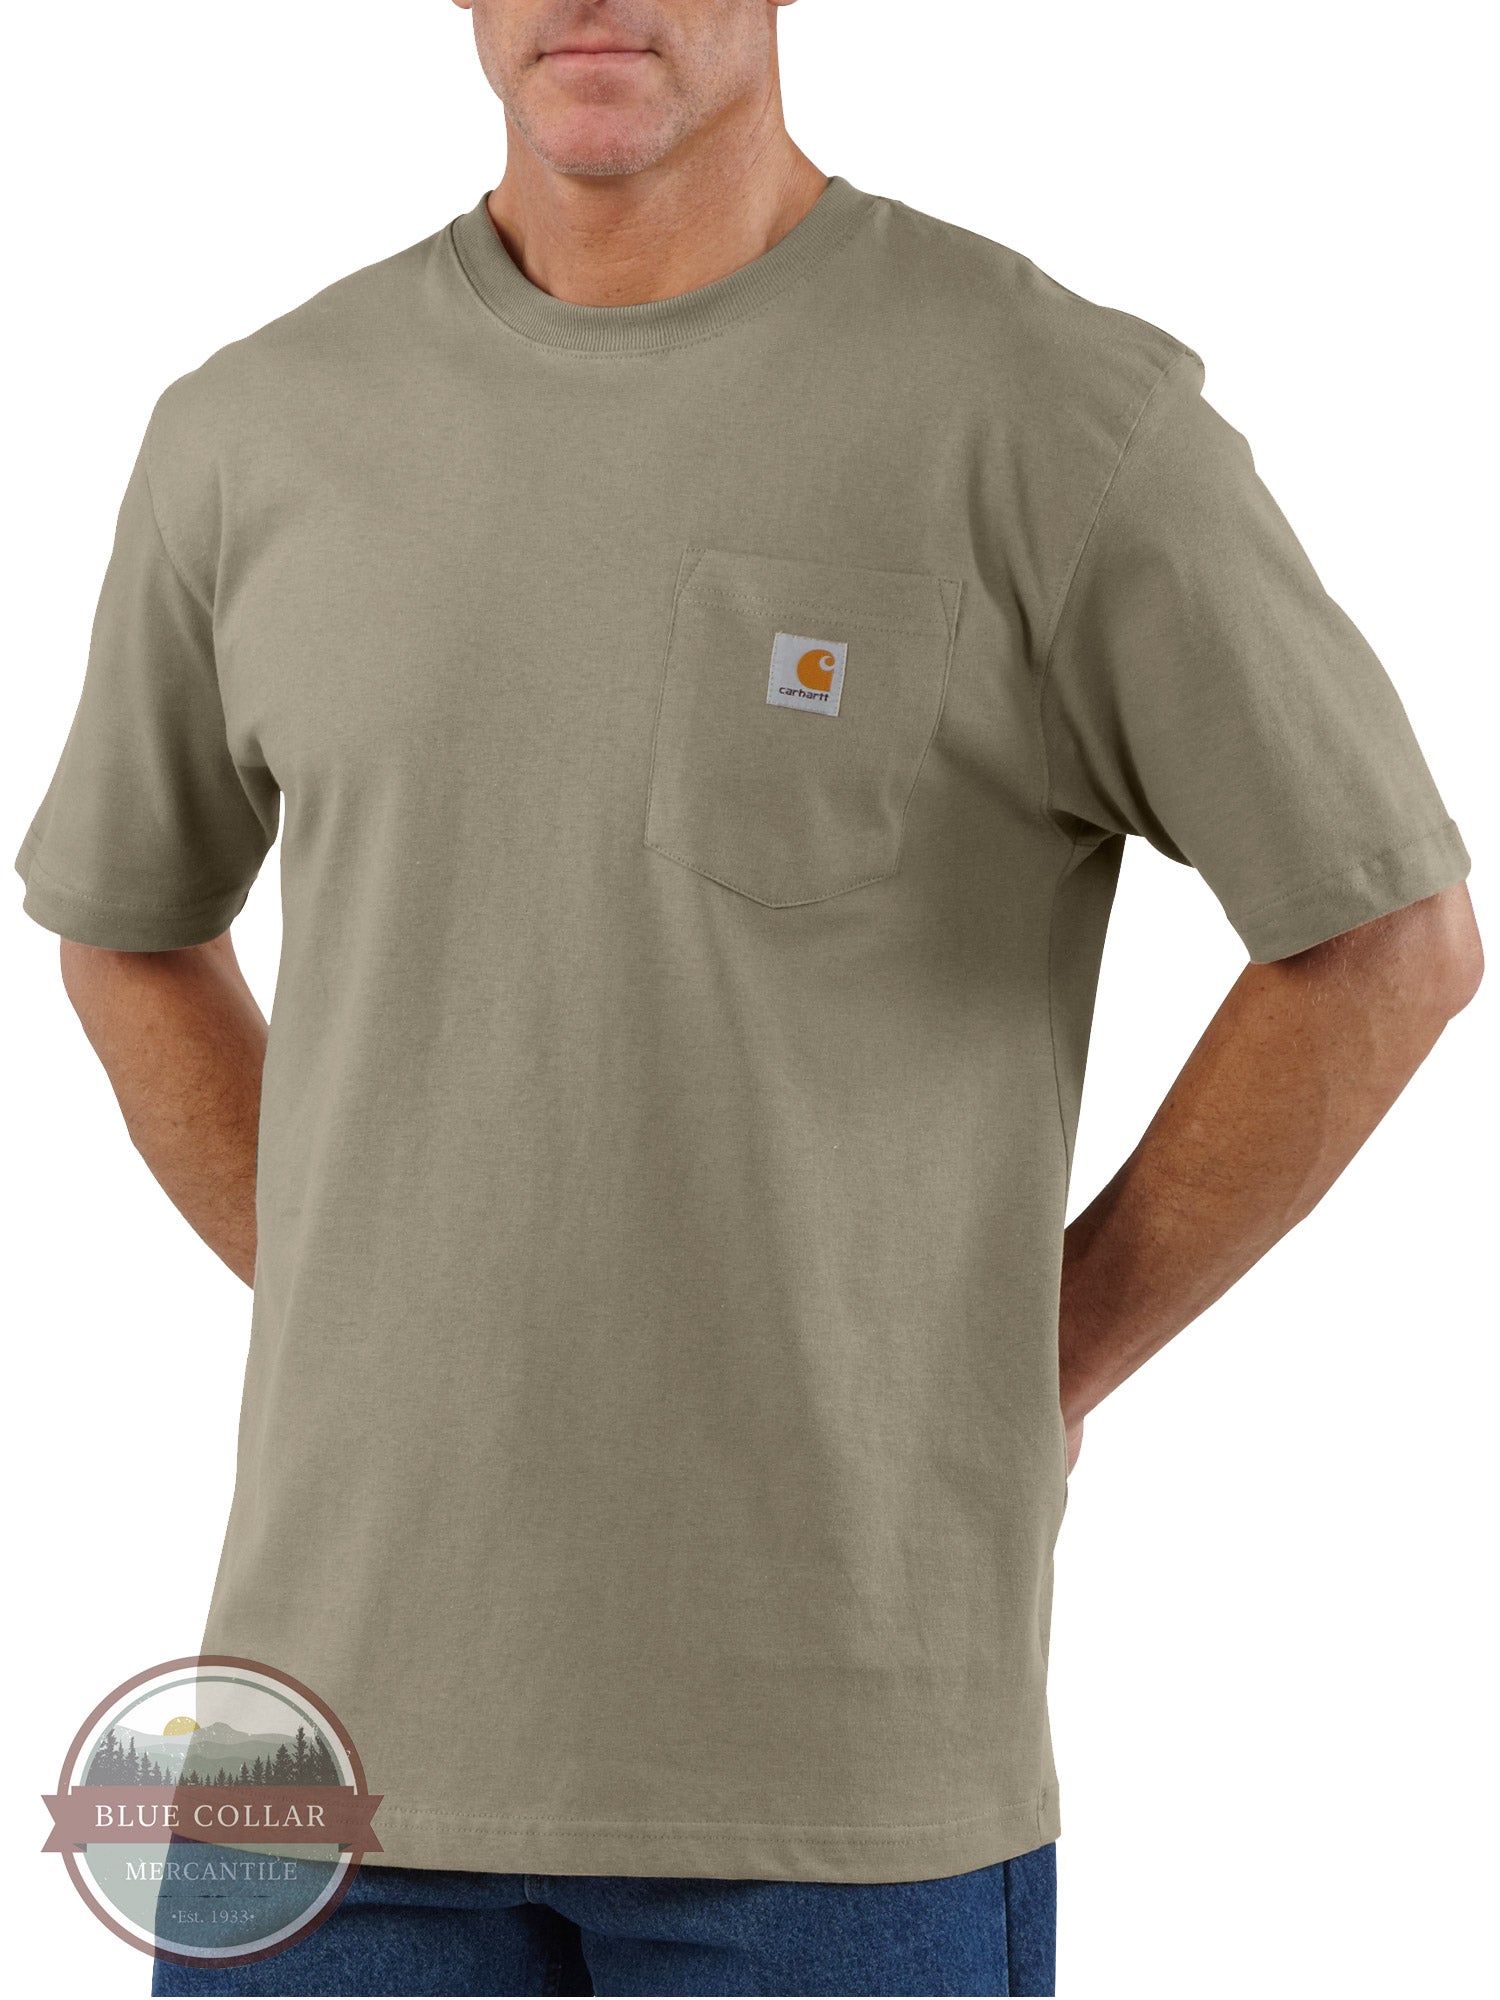 Carhartt K87 Loose Fit Heavyweight Short Sleeve Pocket T-Shirt Basic Colors Desert Front View